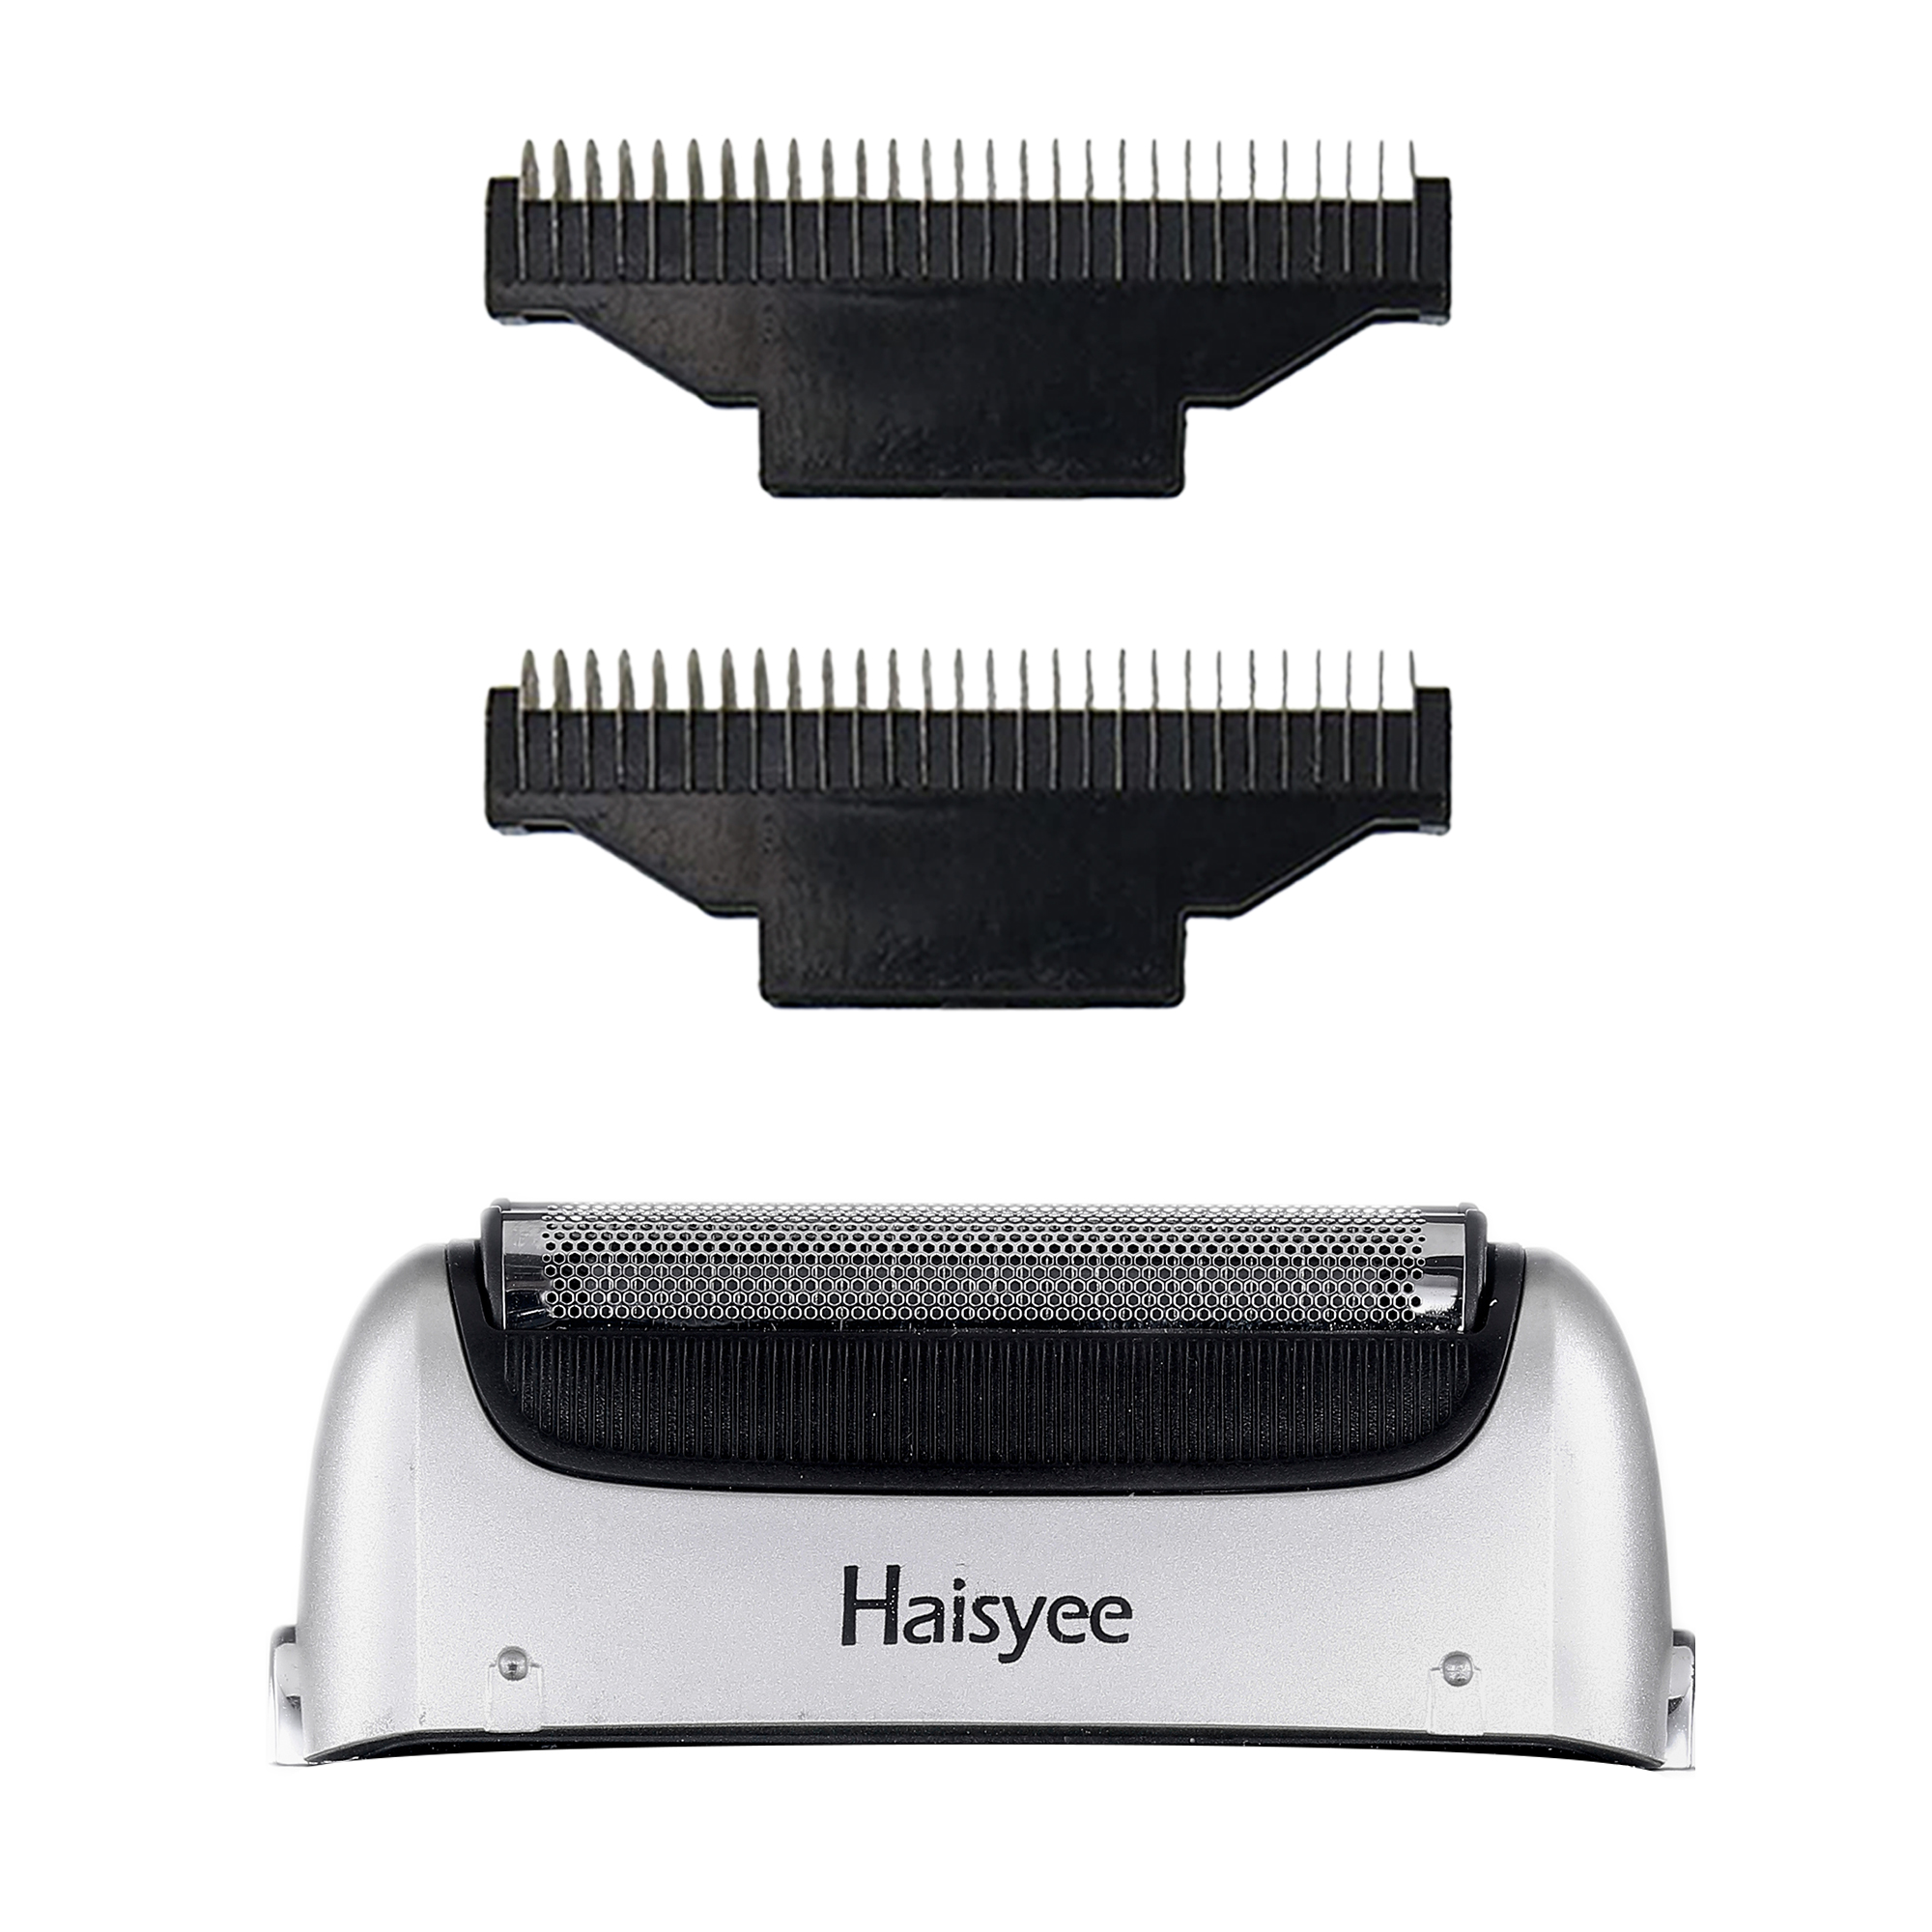 HY-7183 替刃 外刃+内刃 髭剃り 往復式 電気シェーバー セット 替刃 交換用 NH-7613 シェーバー